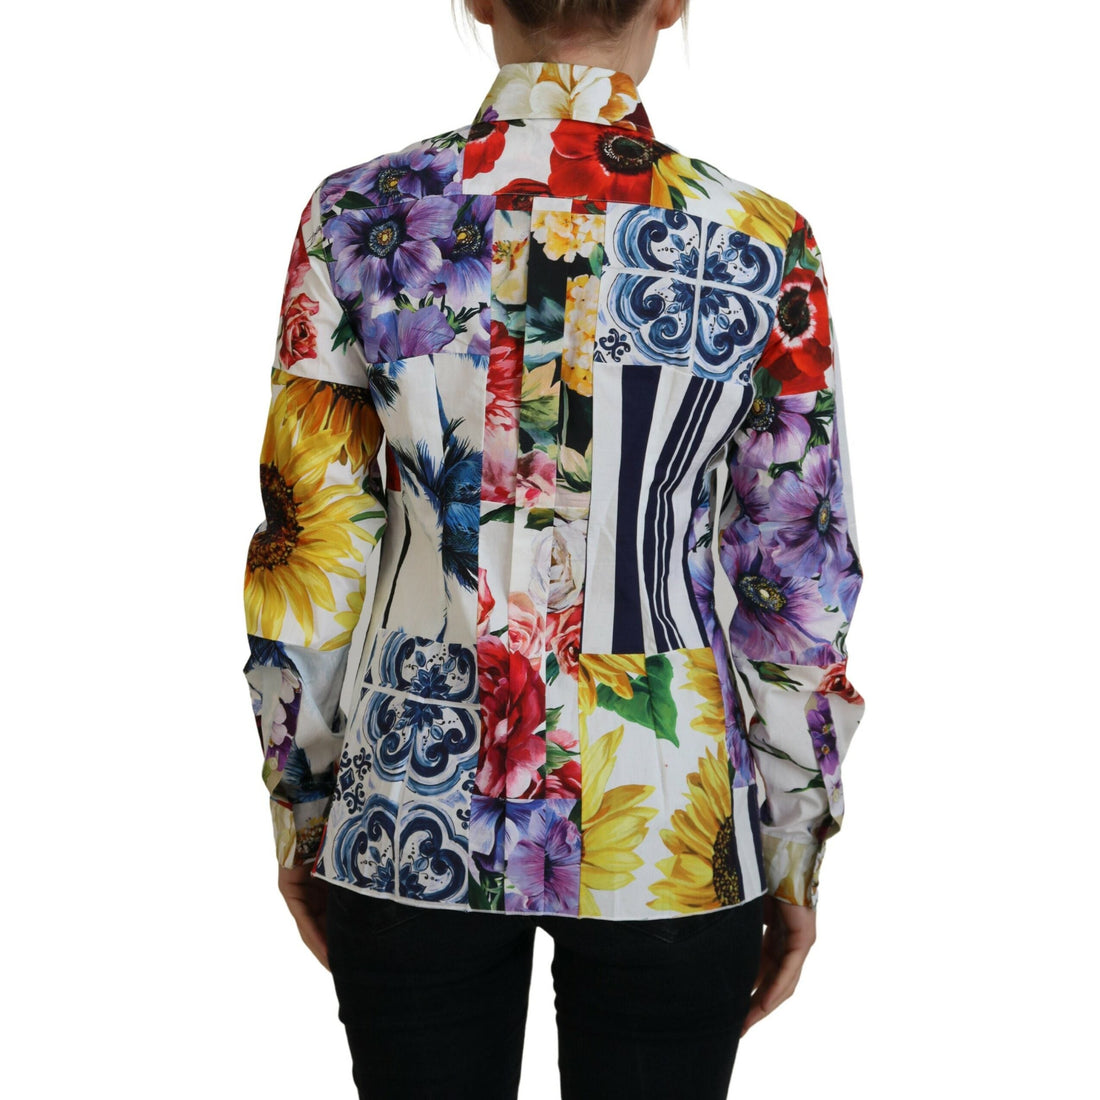 Dolce & Gabbana Multicolor Floral Cotton Collared Blouse Top